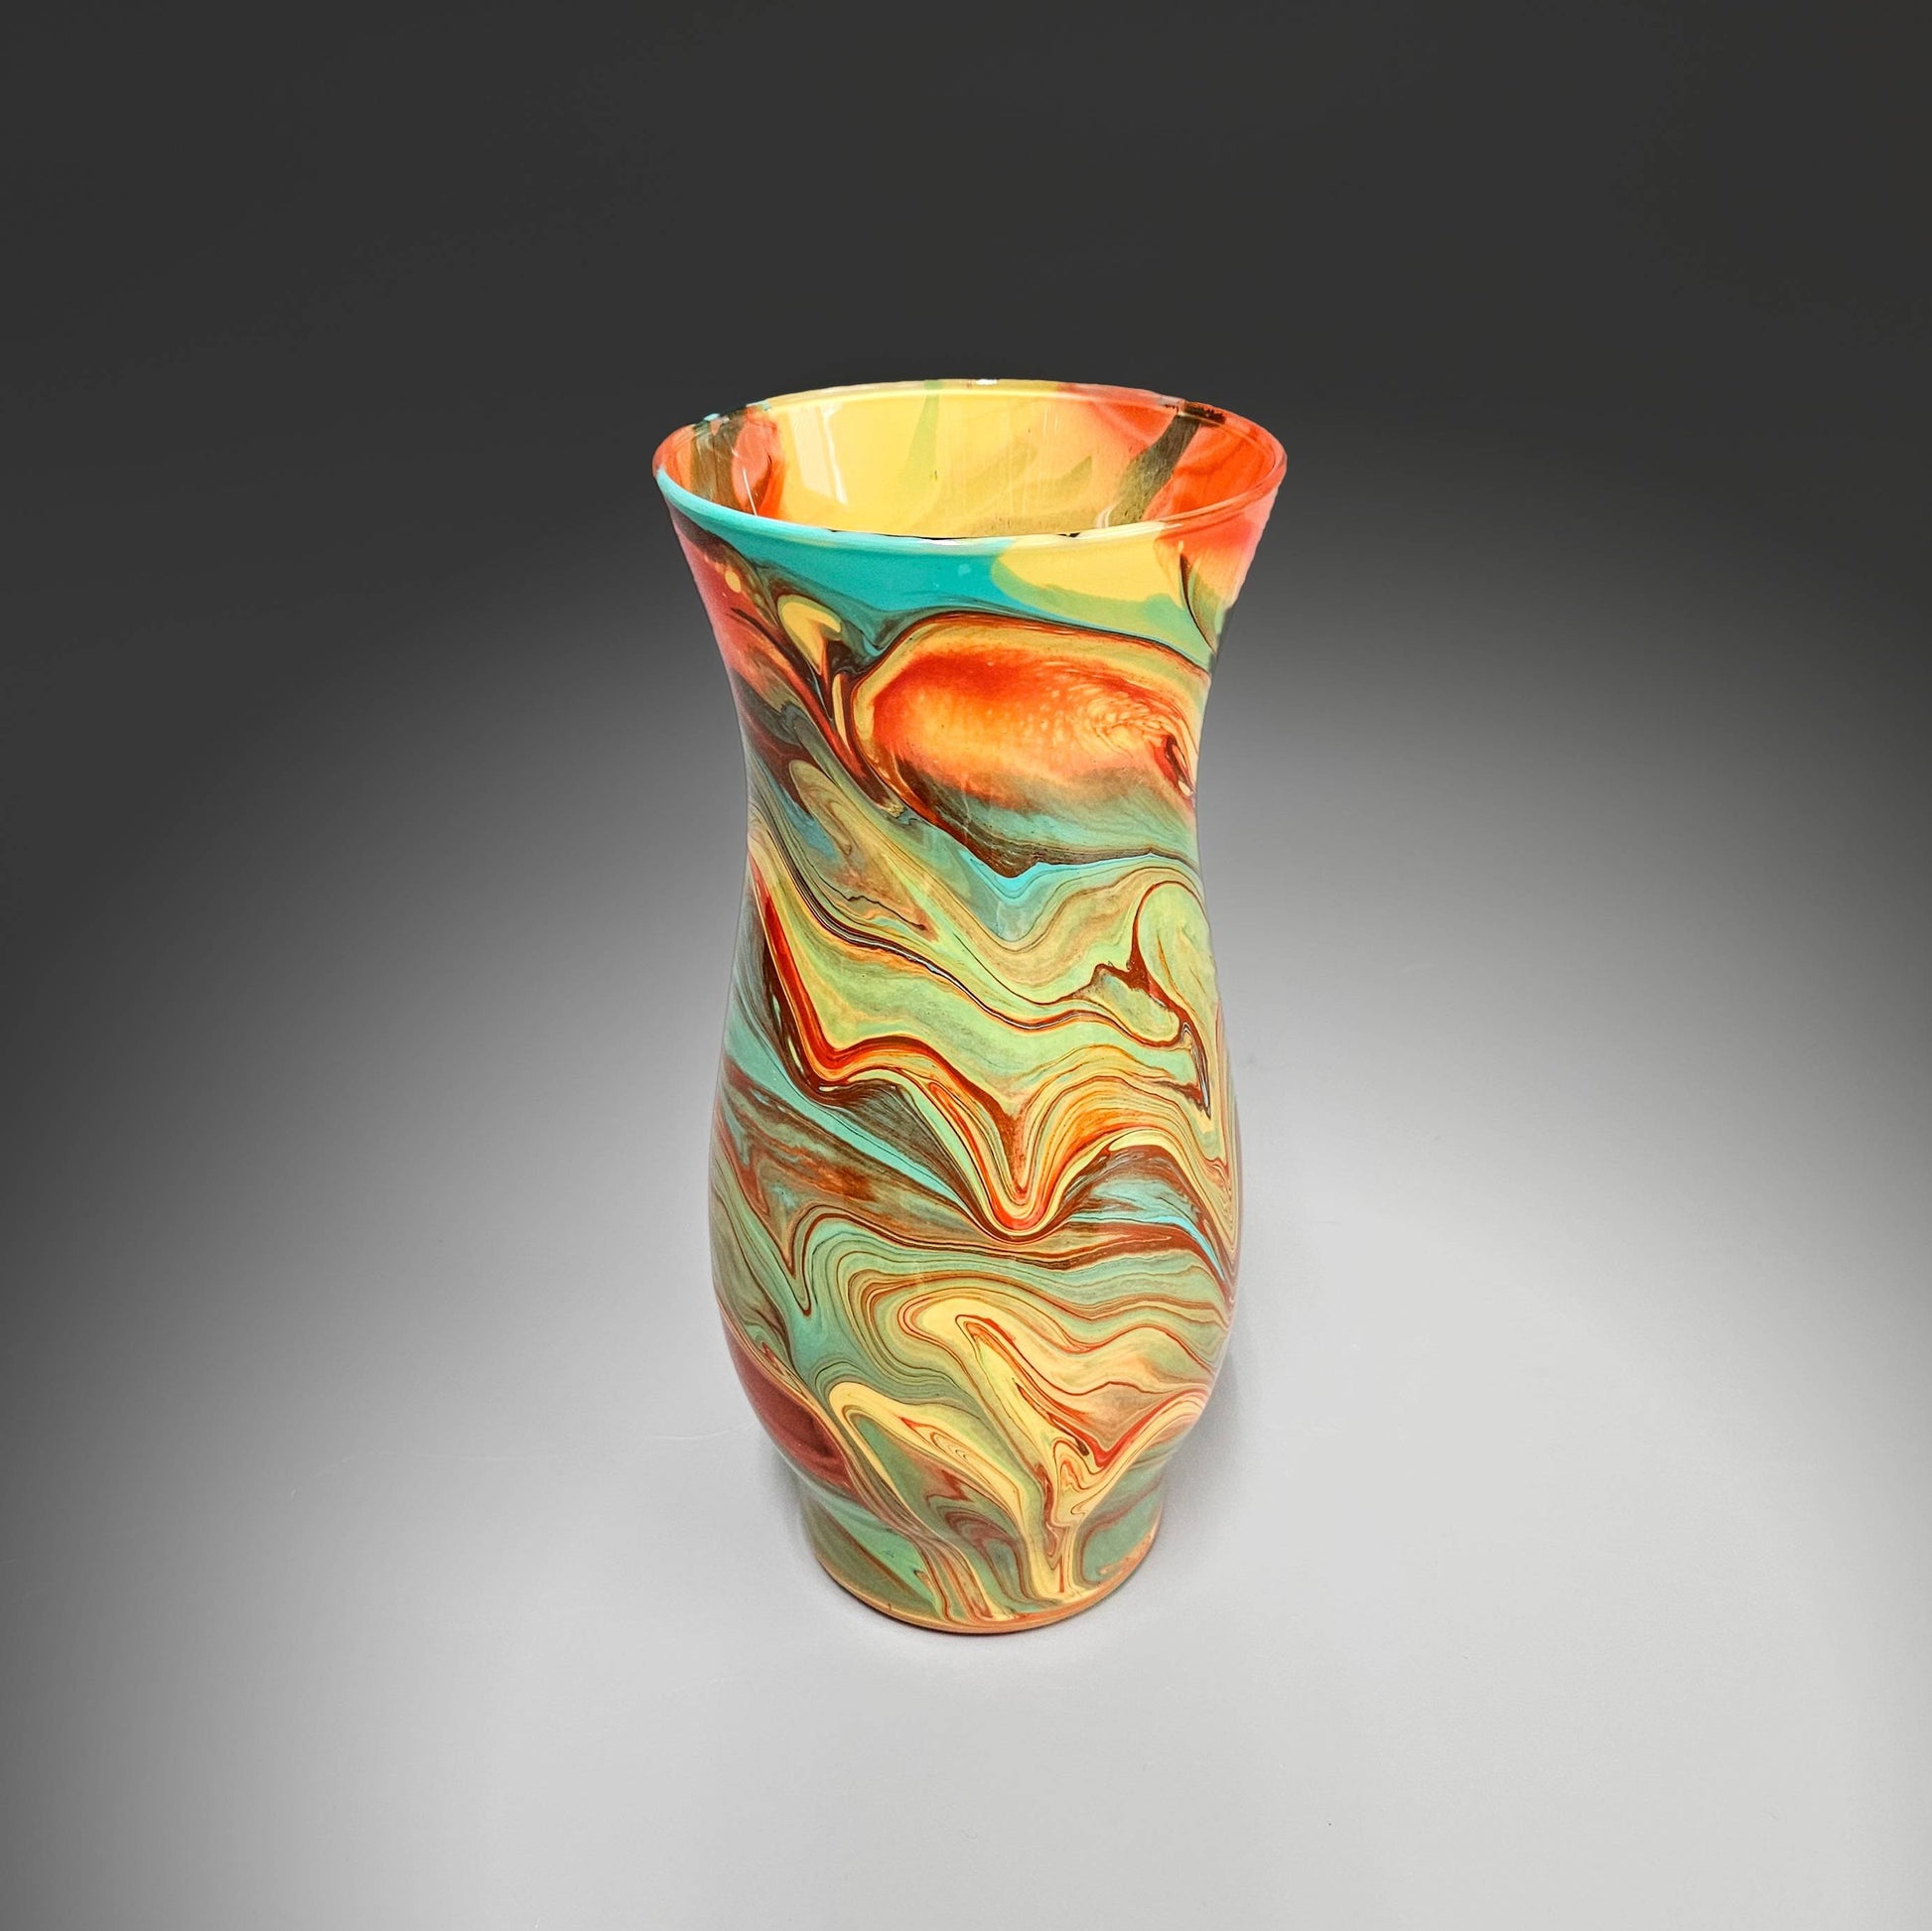 Painted Glass Vase in Turquoise Blue Orange | Hostess Gift Ideas